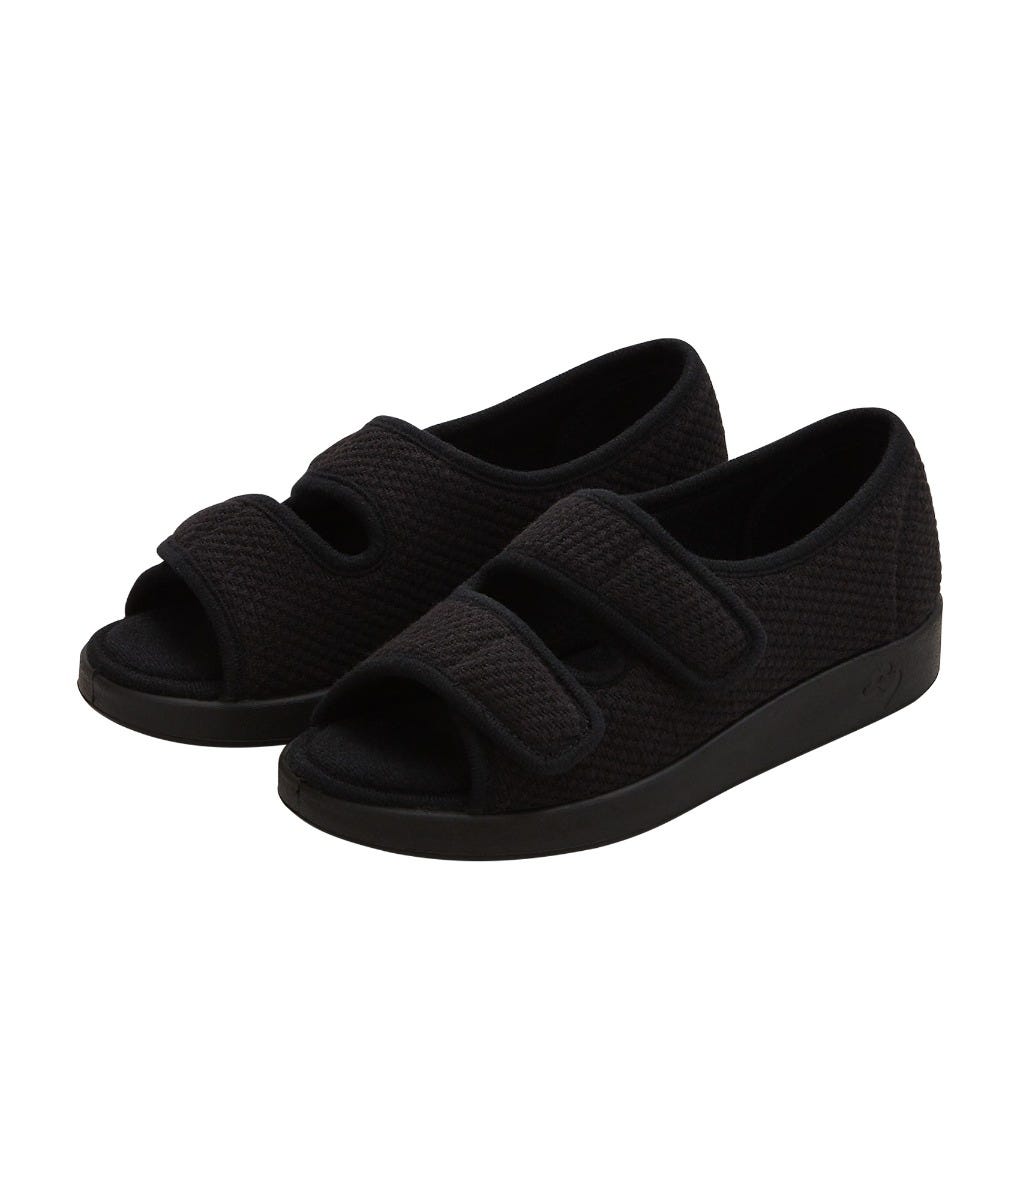 Silverts Women's Easy Closure Sandals - Black - 6